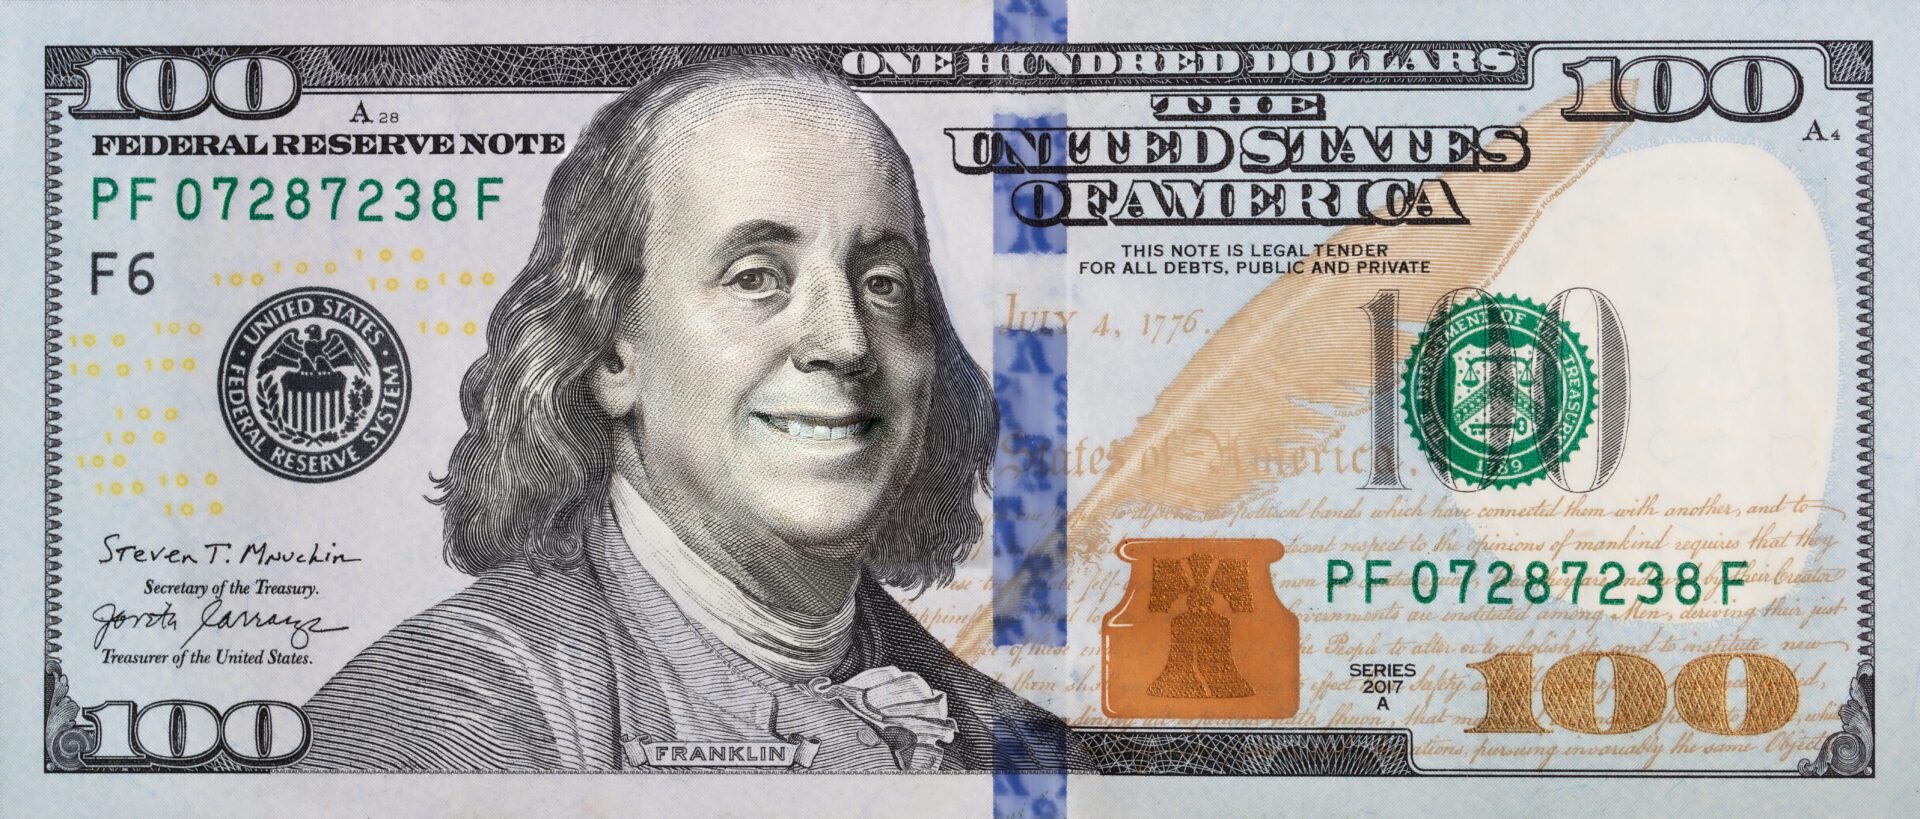 Smiling Ben Franklin on fake $100 front-only